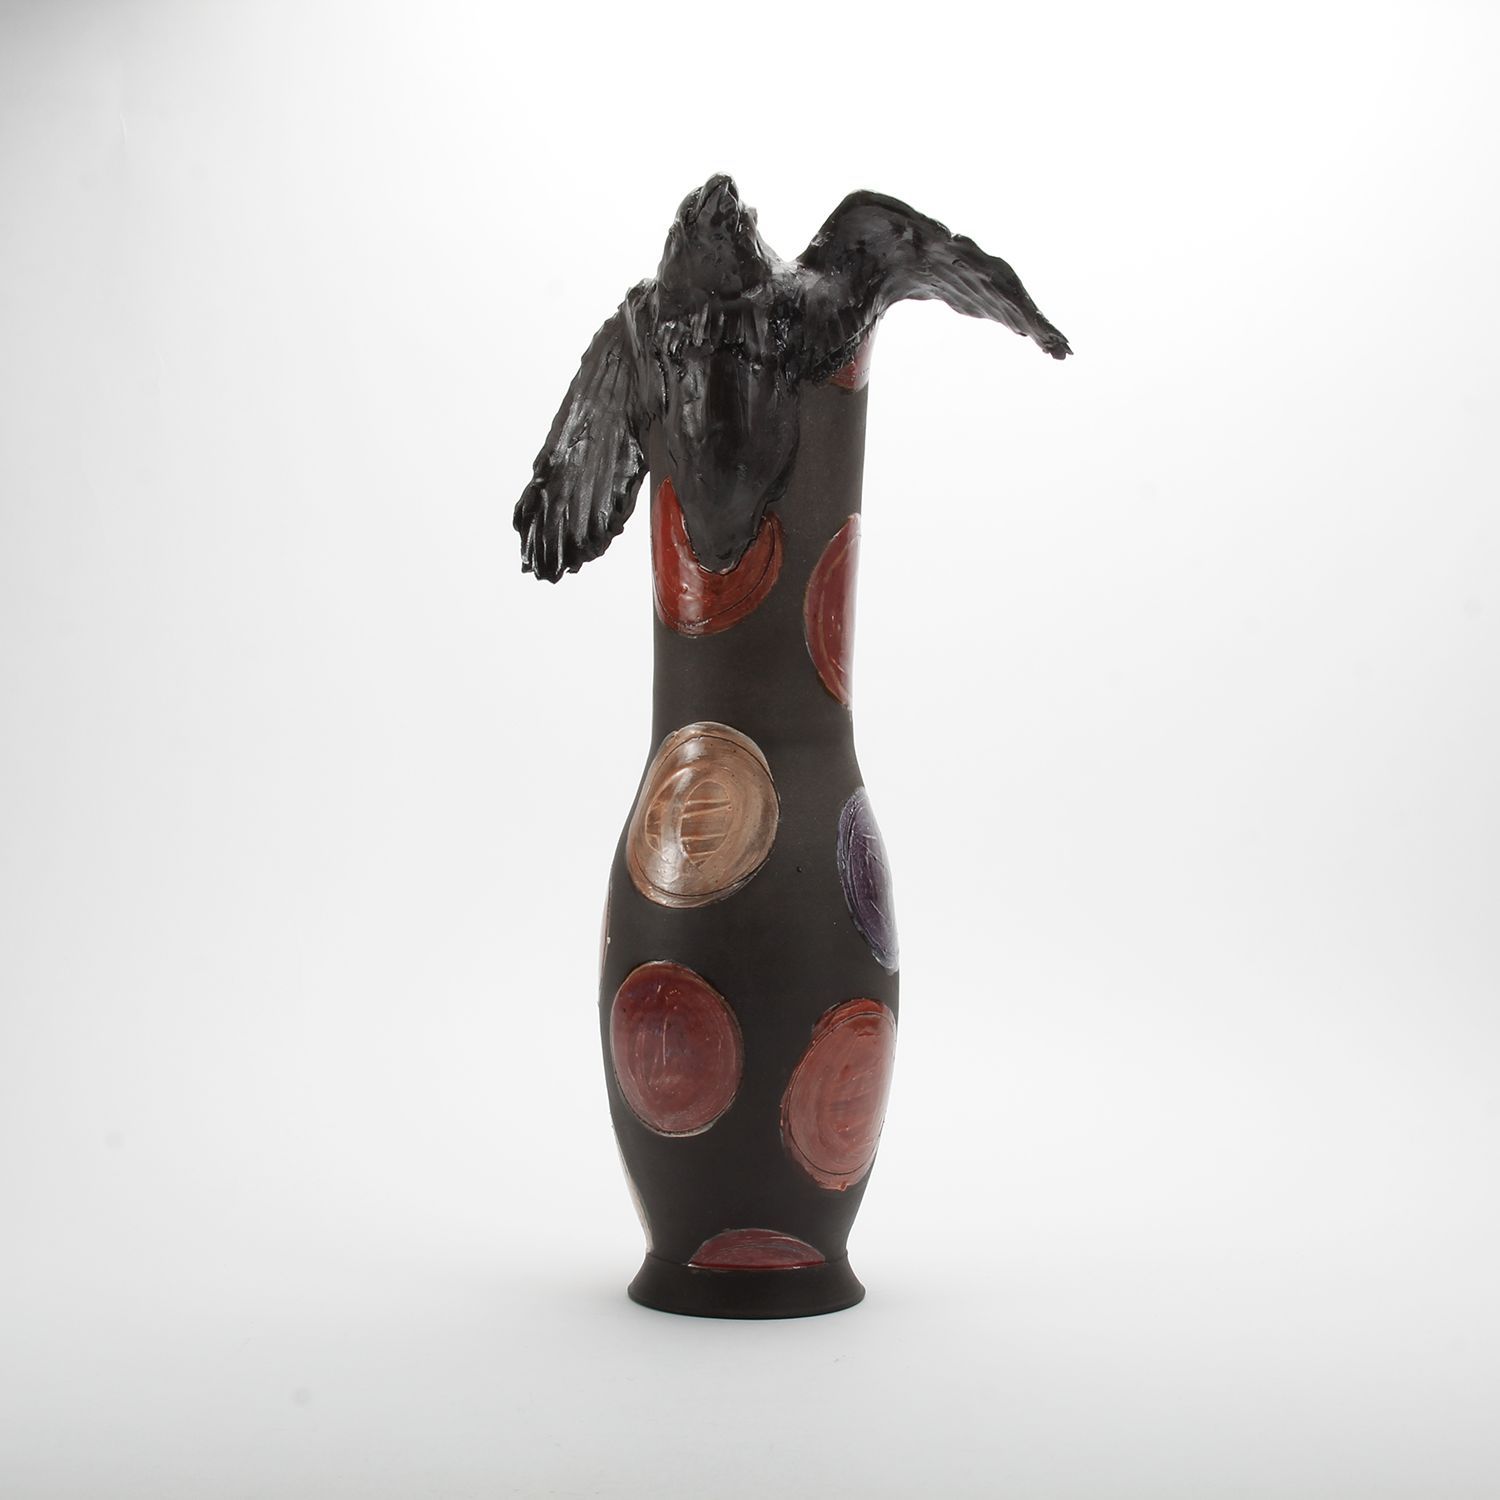 Marla Benton: Sculpture Vase Product Image 2 of 5